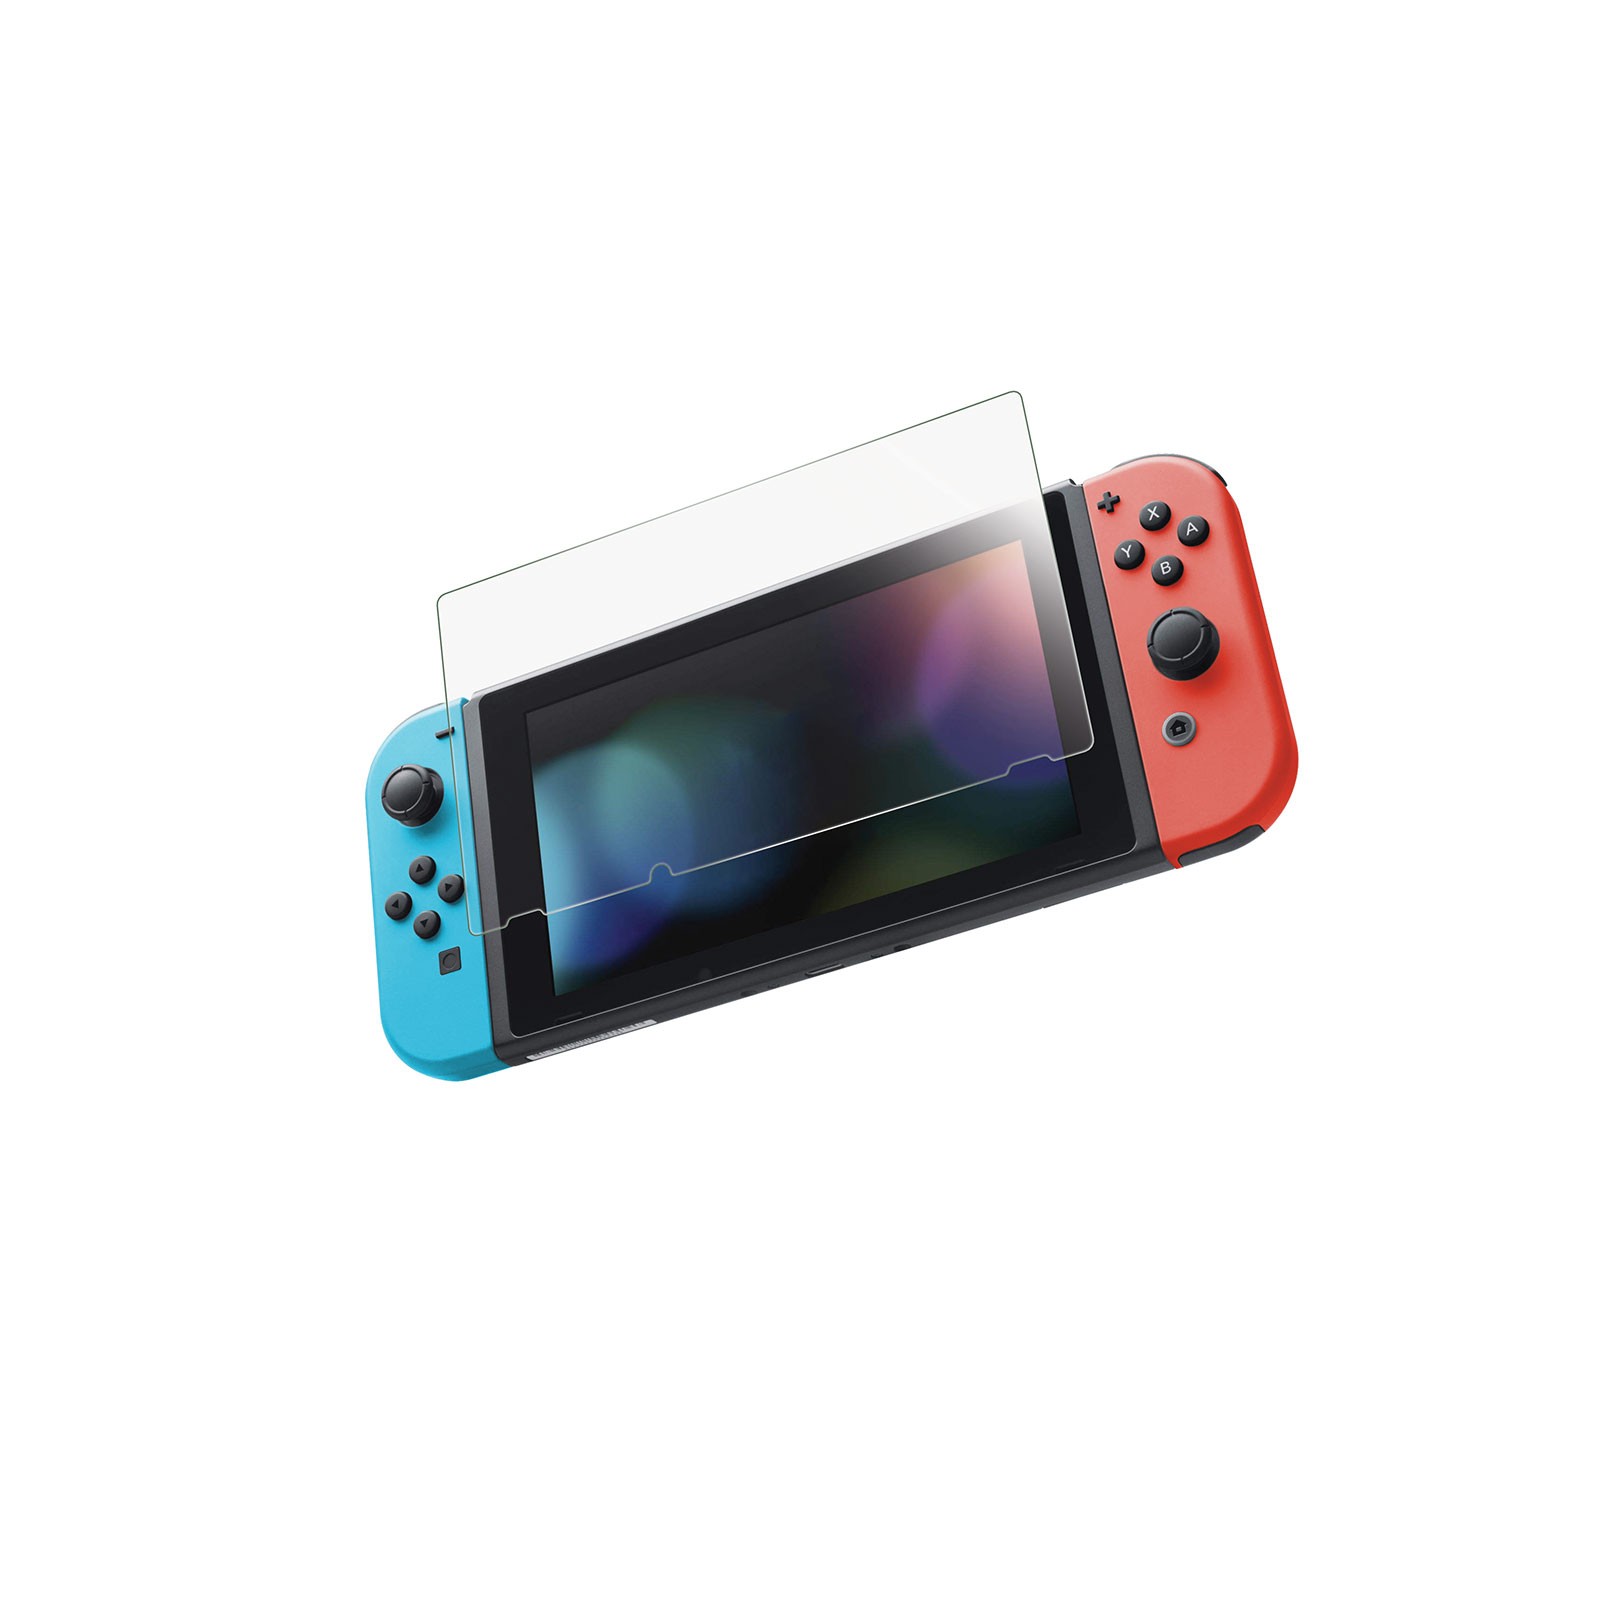 Protection en verre pour Nintendo Switch OLED